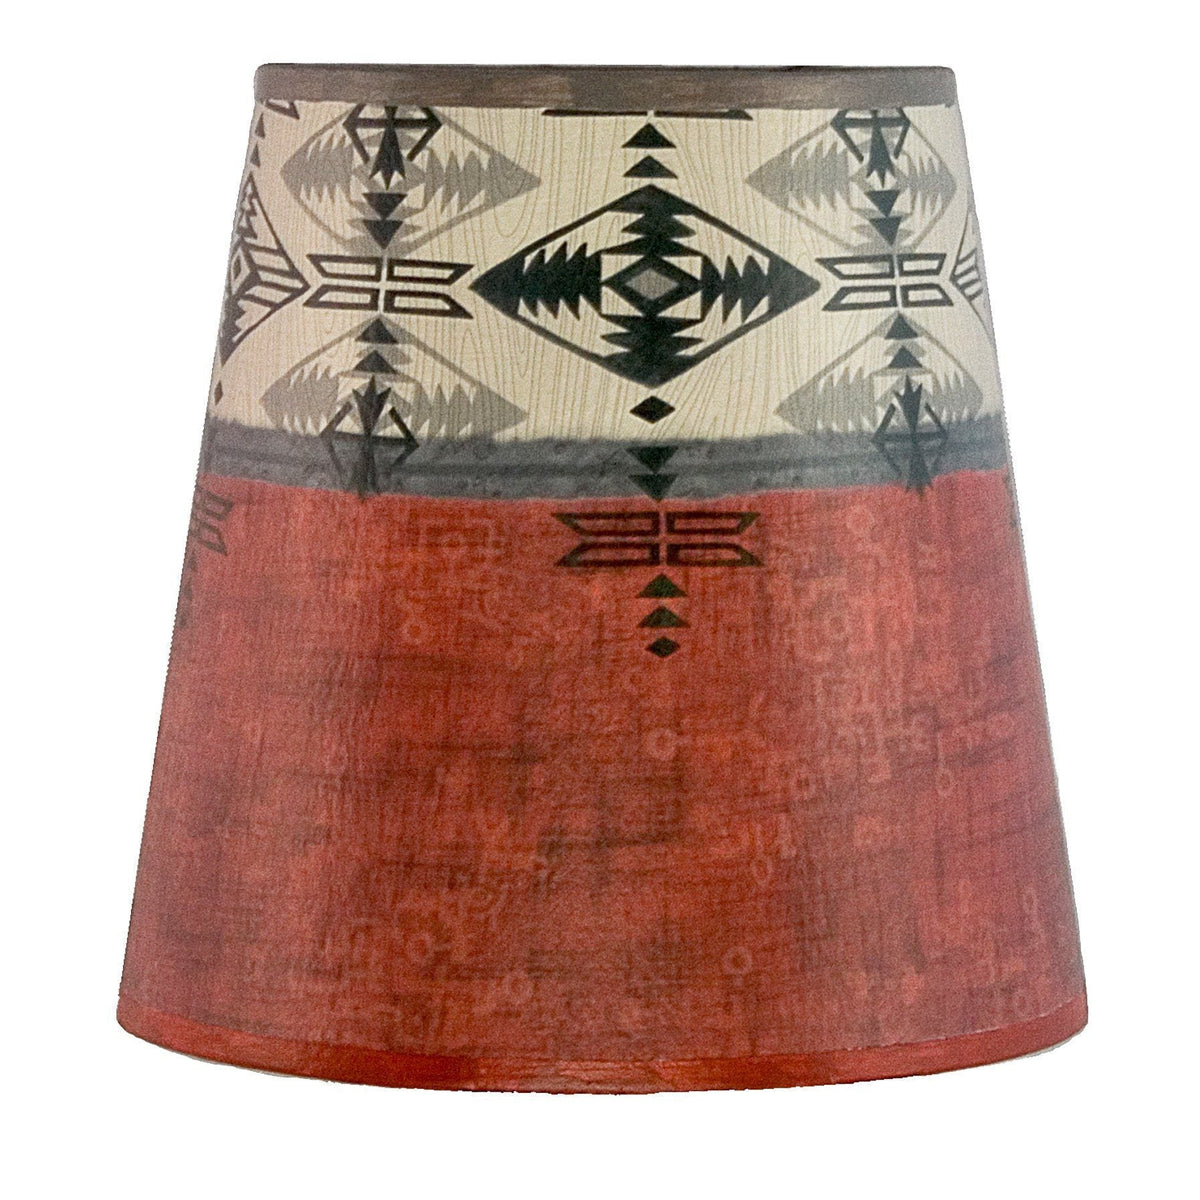 Small Drum Lamp Shade in Mesa